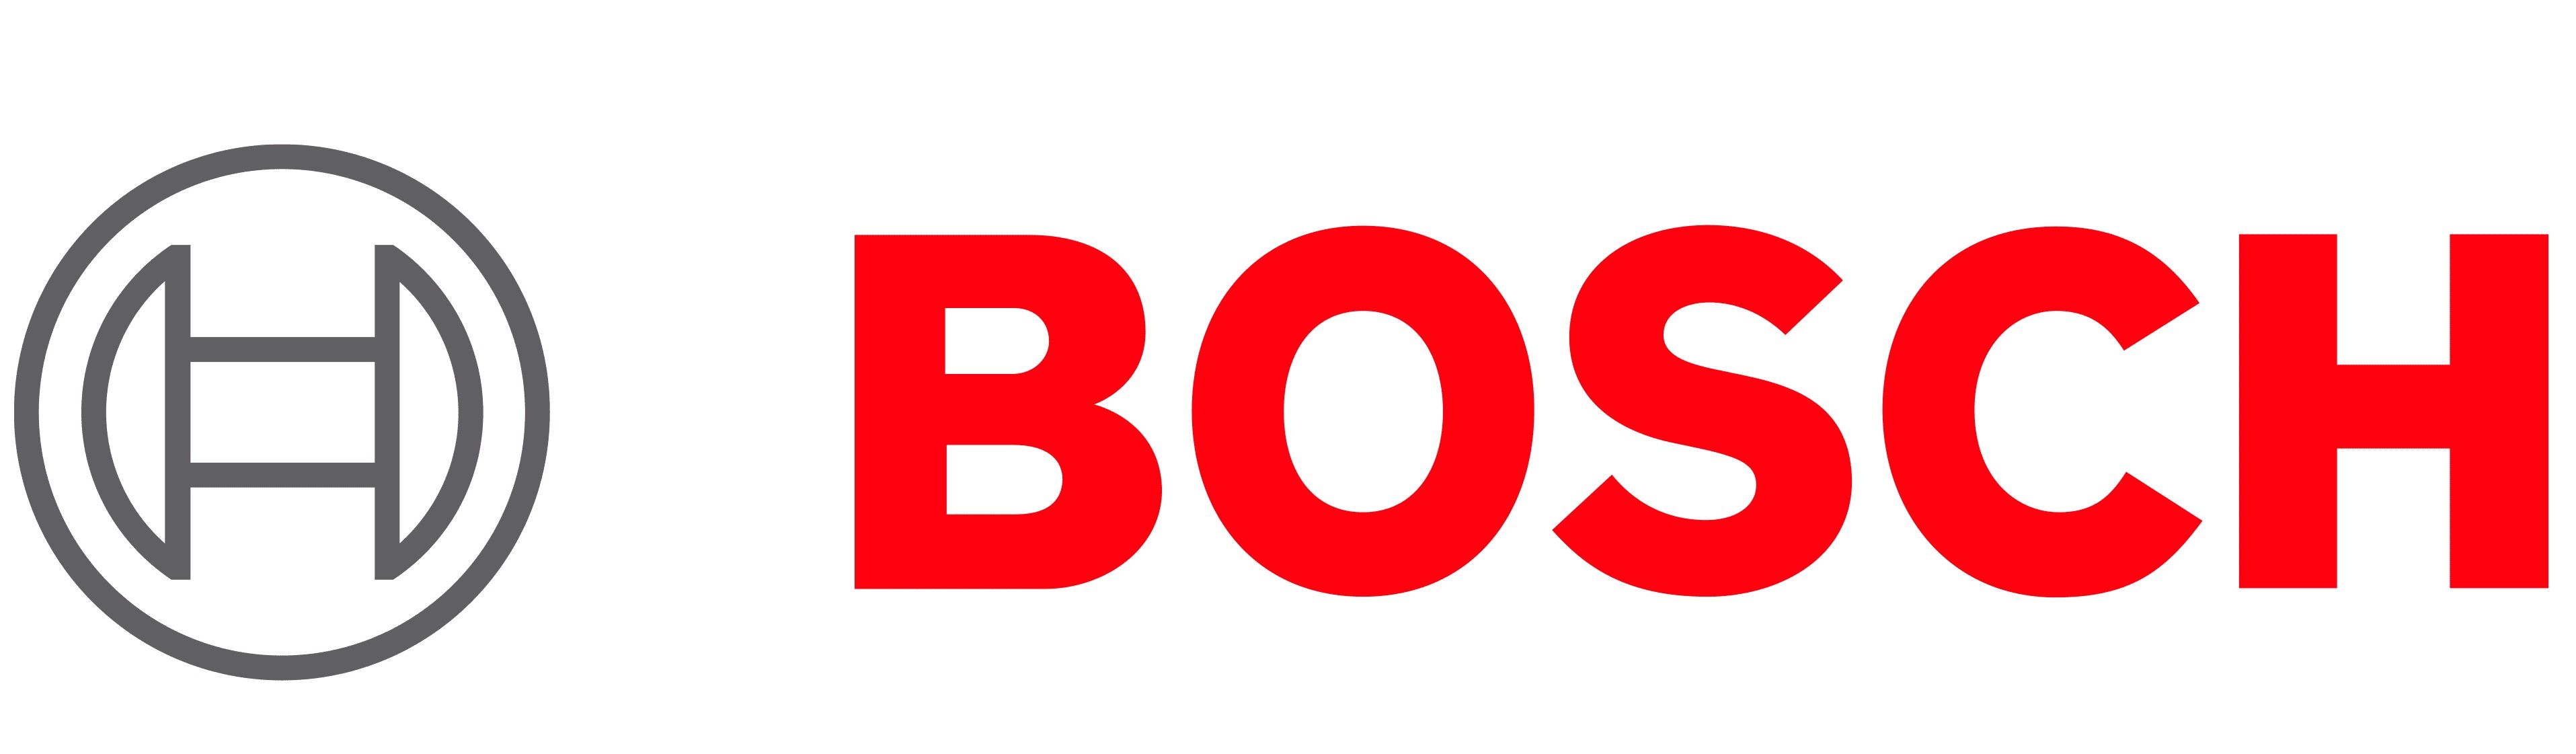 Bosch hiring Data Engineer